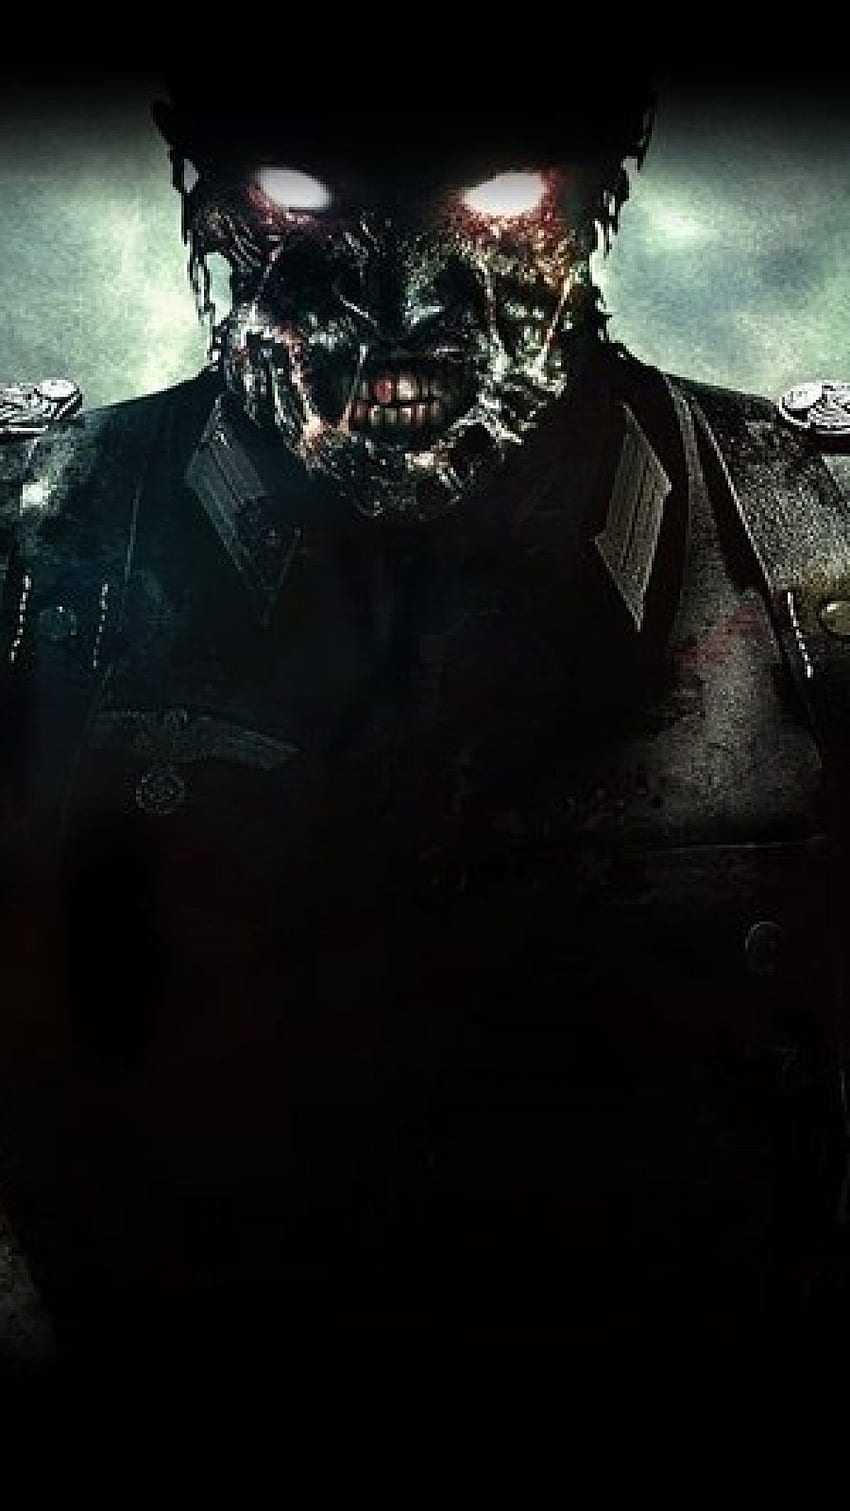 black ops 2 zombies wallpaper